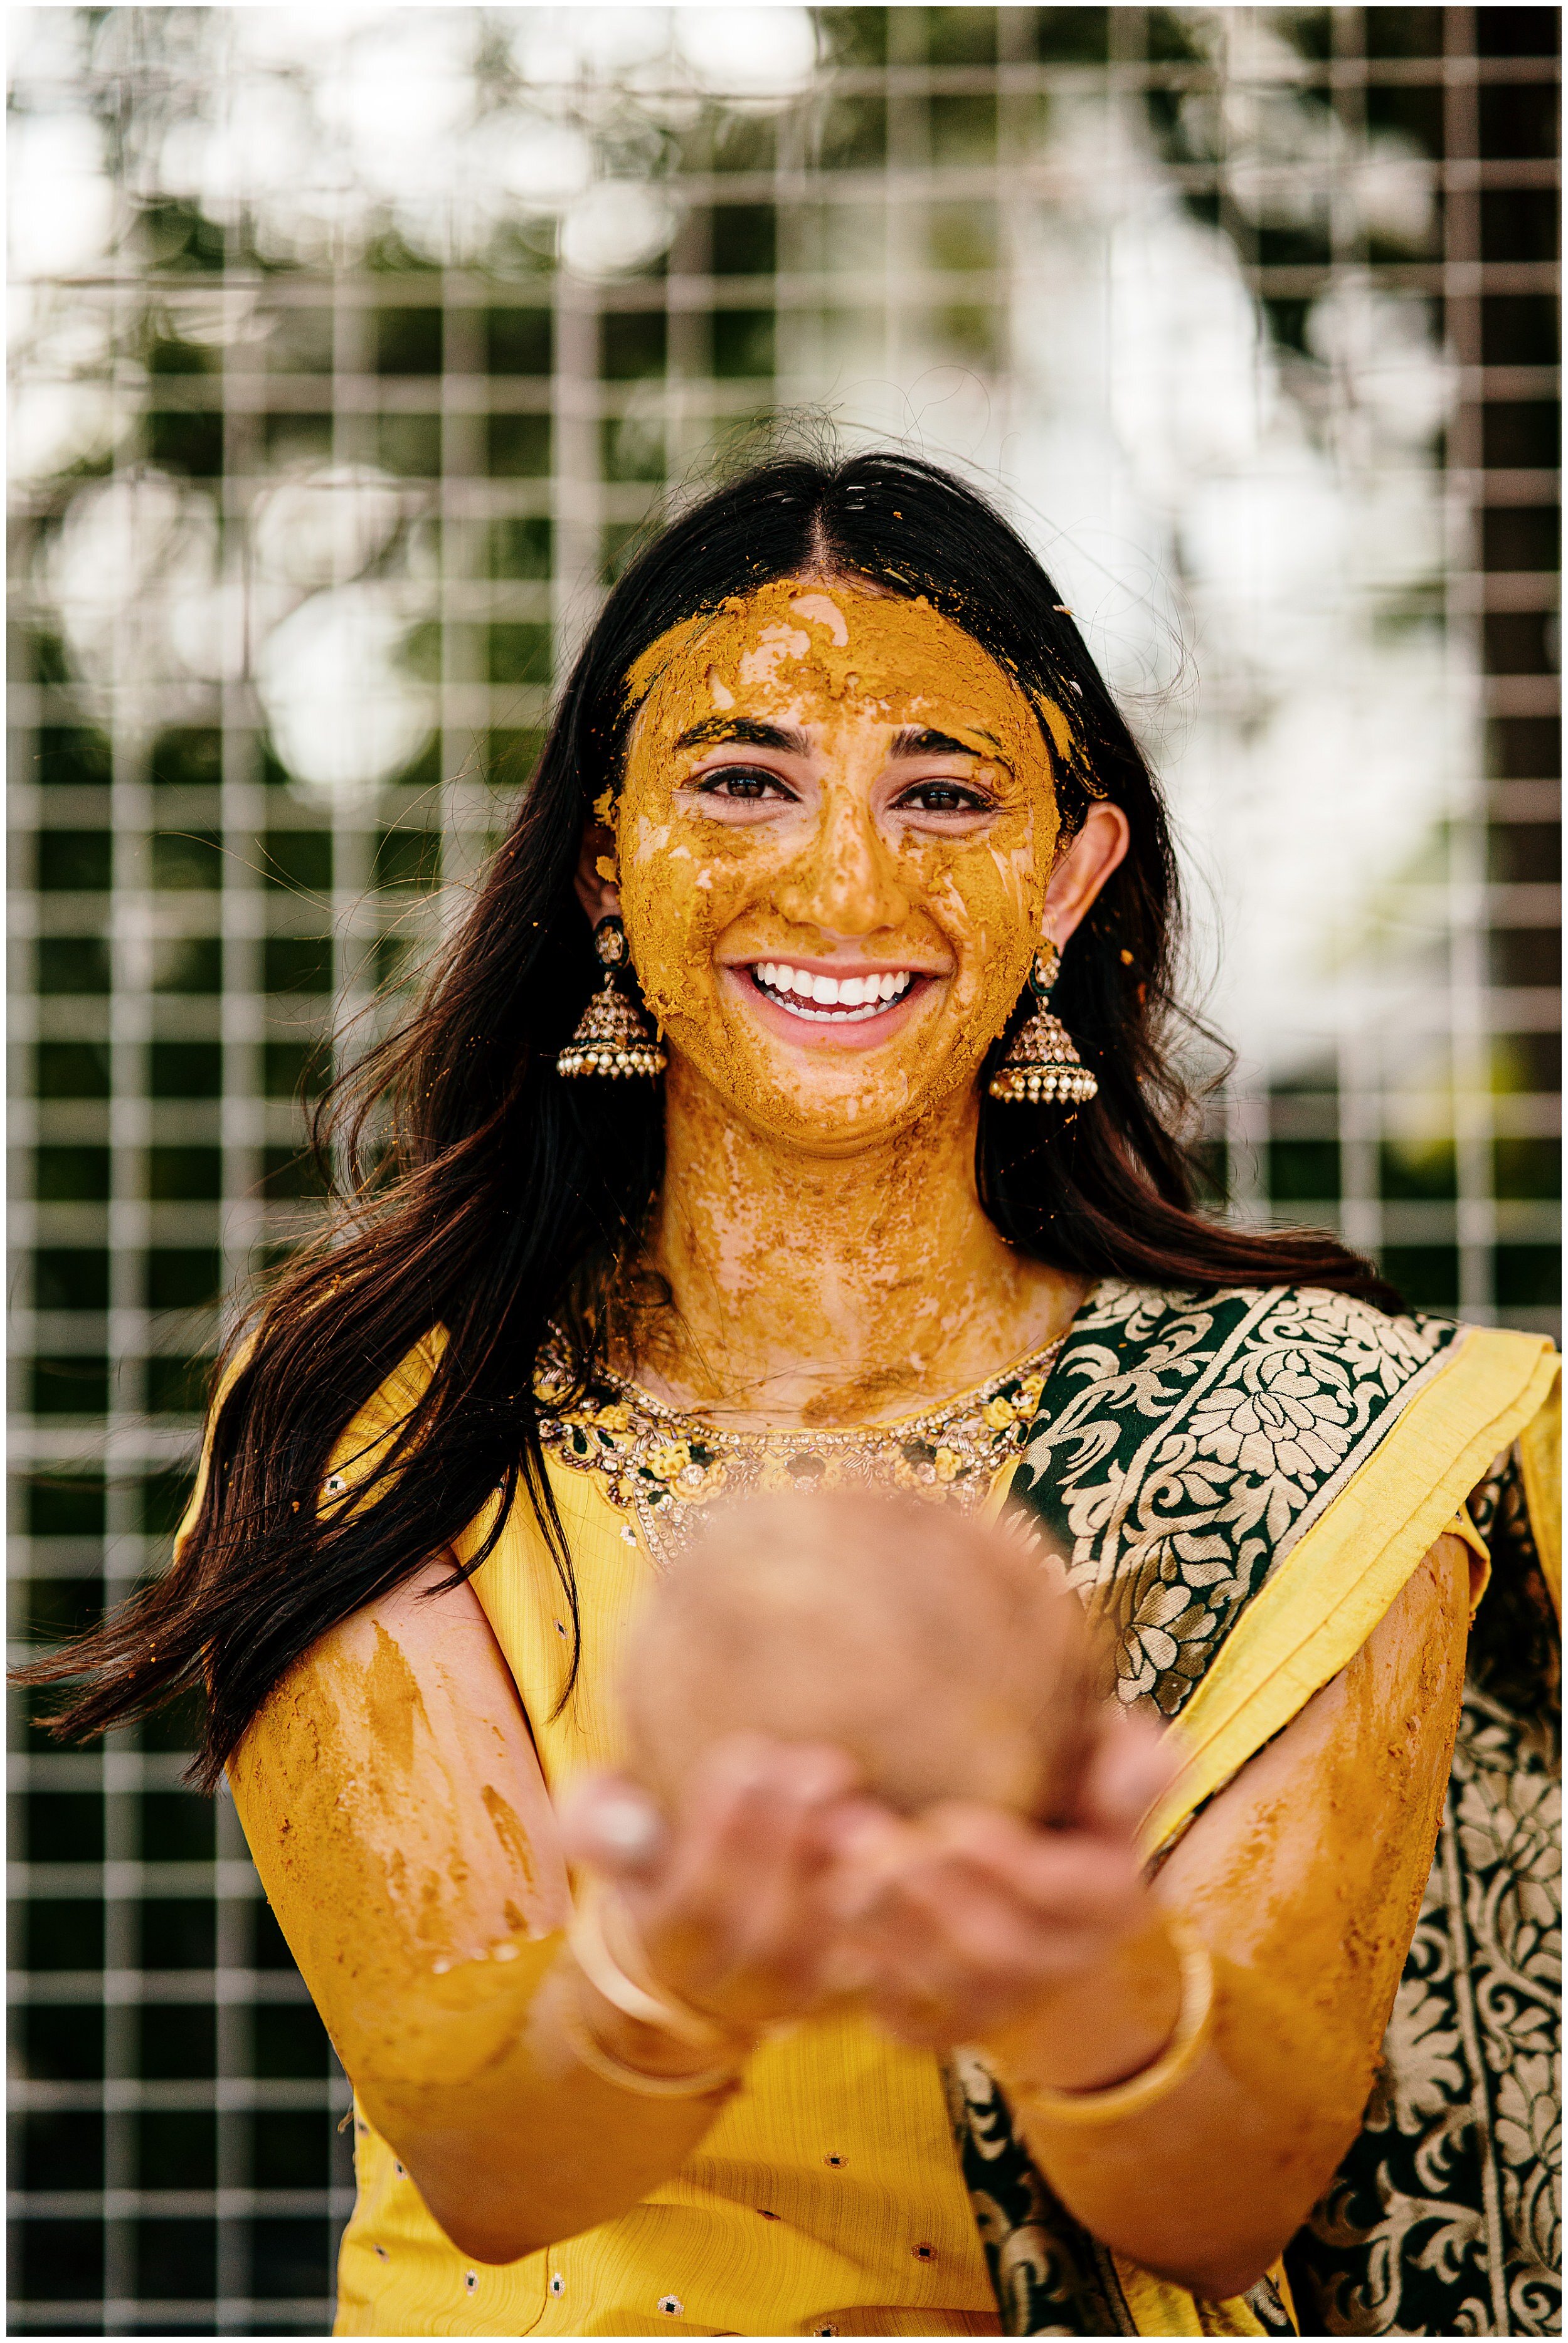 Fickling Convention Centre Wedding Venue | Auckland Wedding Photographer | Auckland Videographer | Indian Wedding Ceremony | Indian Wedding Ceremony | Auckland Venue | Henna Ceremony | Haldi Ceremony